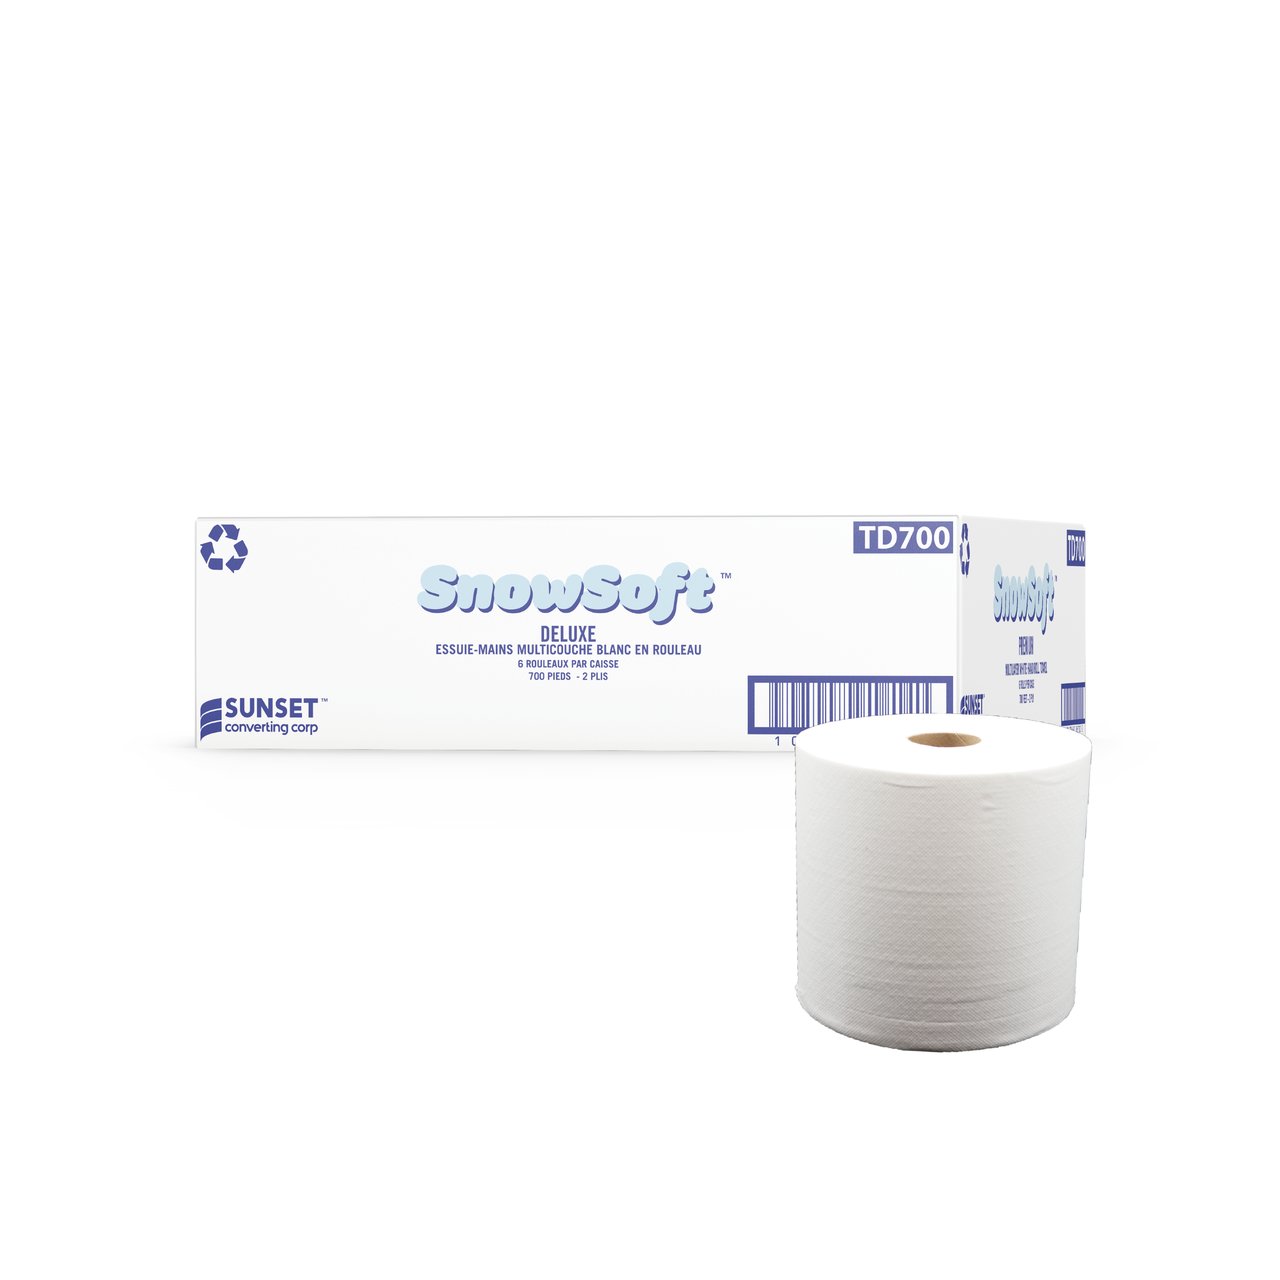 Snow Soft WHITE PAPER TOWEL 7.65x700 /6cs